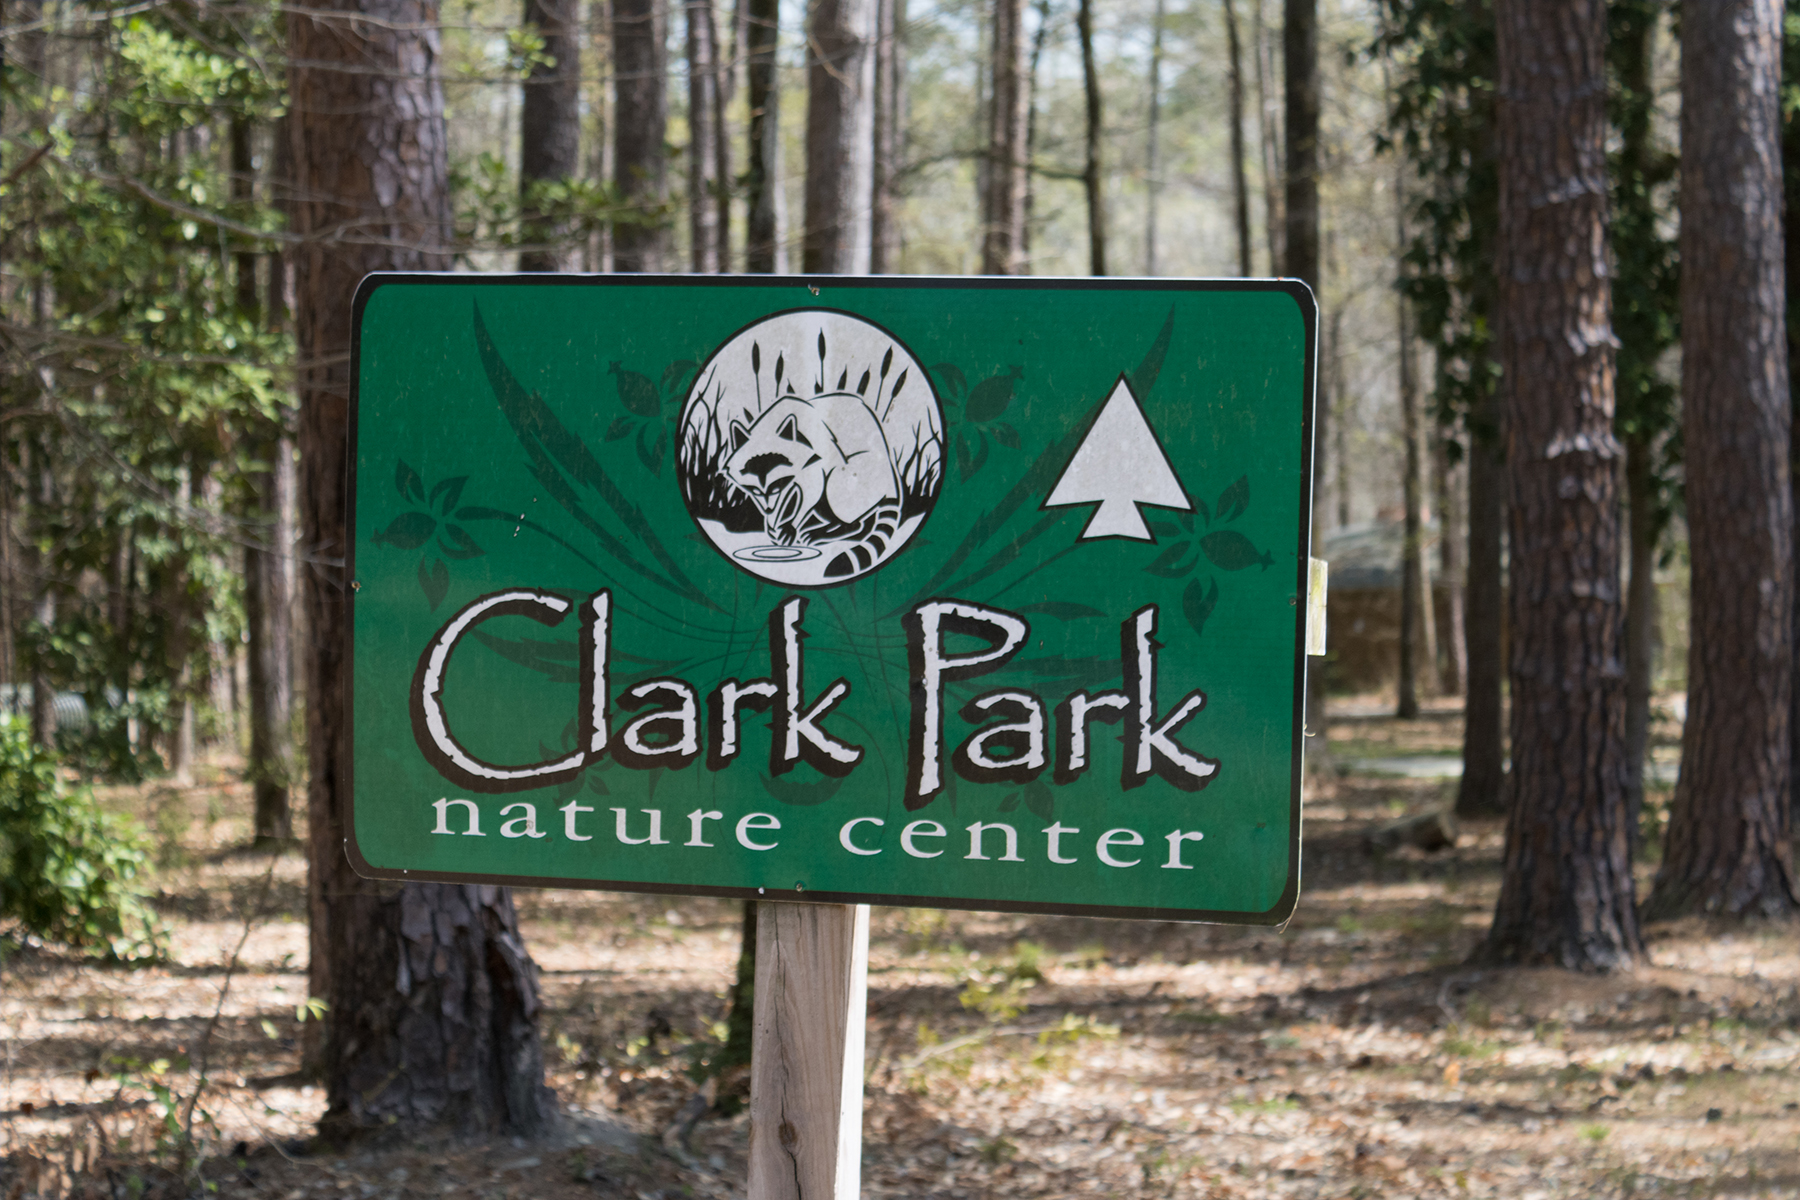 Clark park nature center